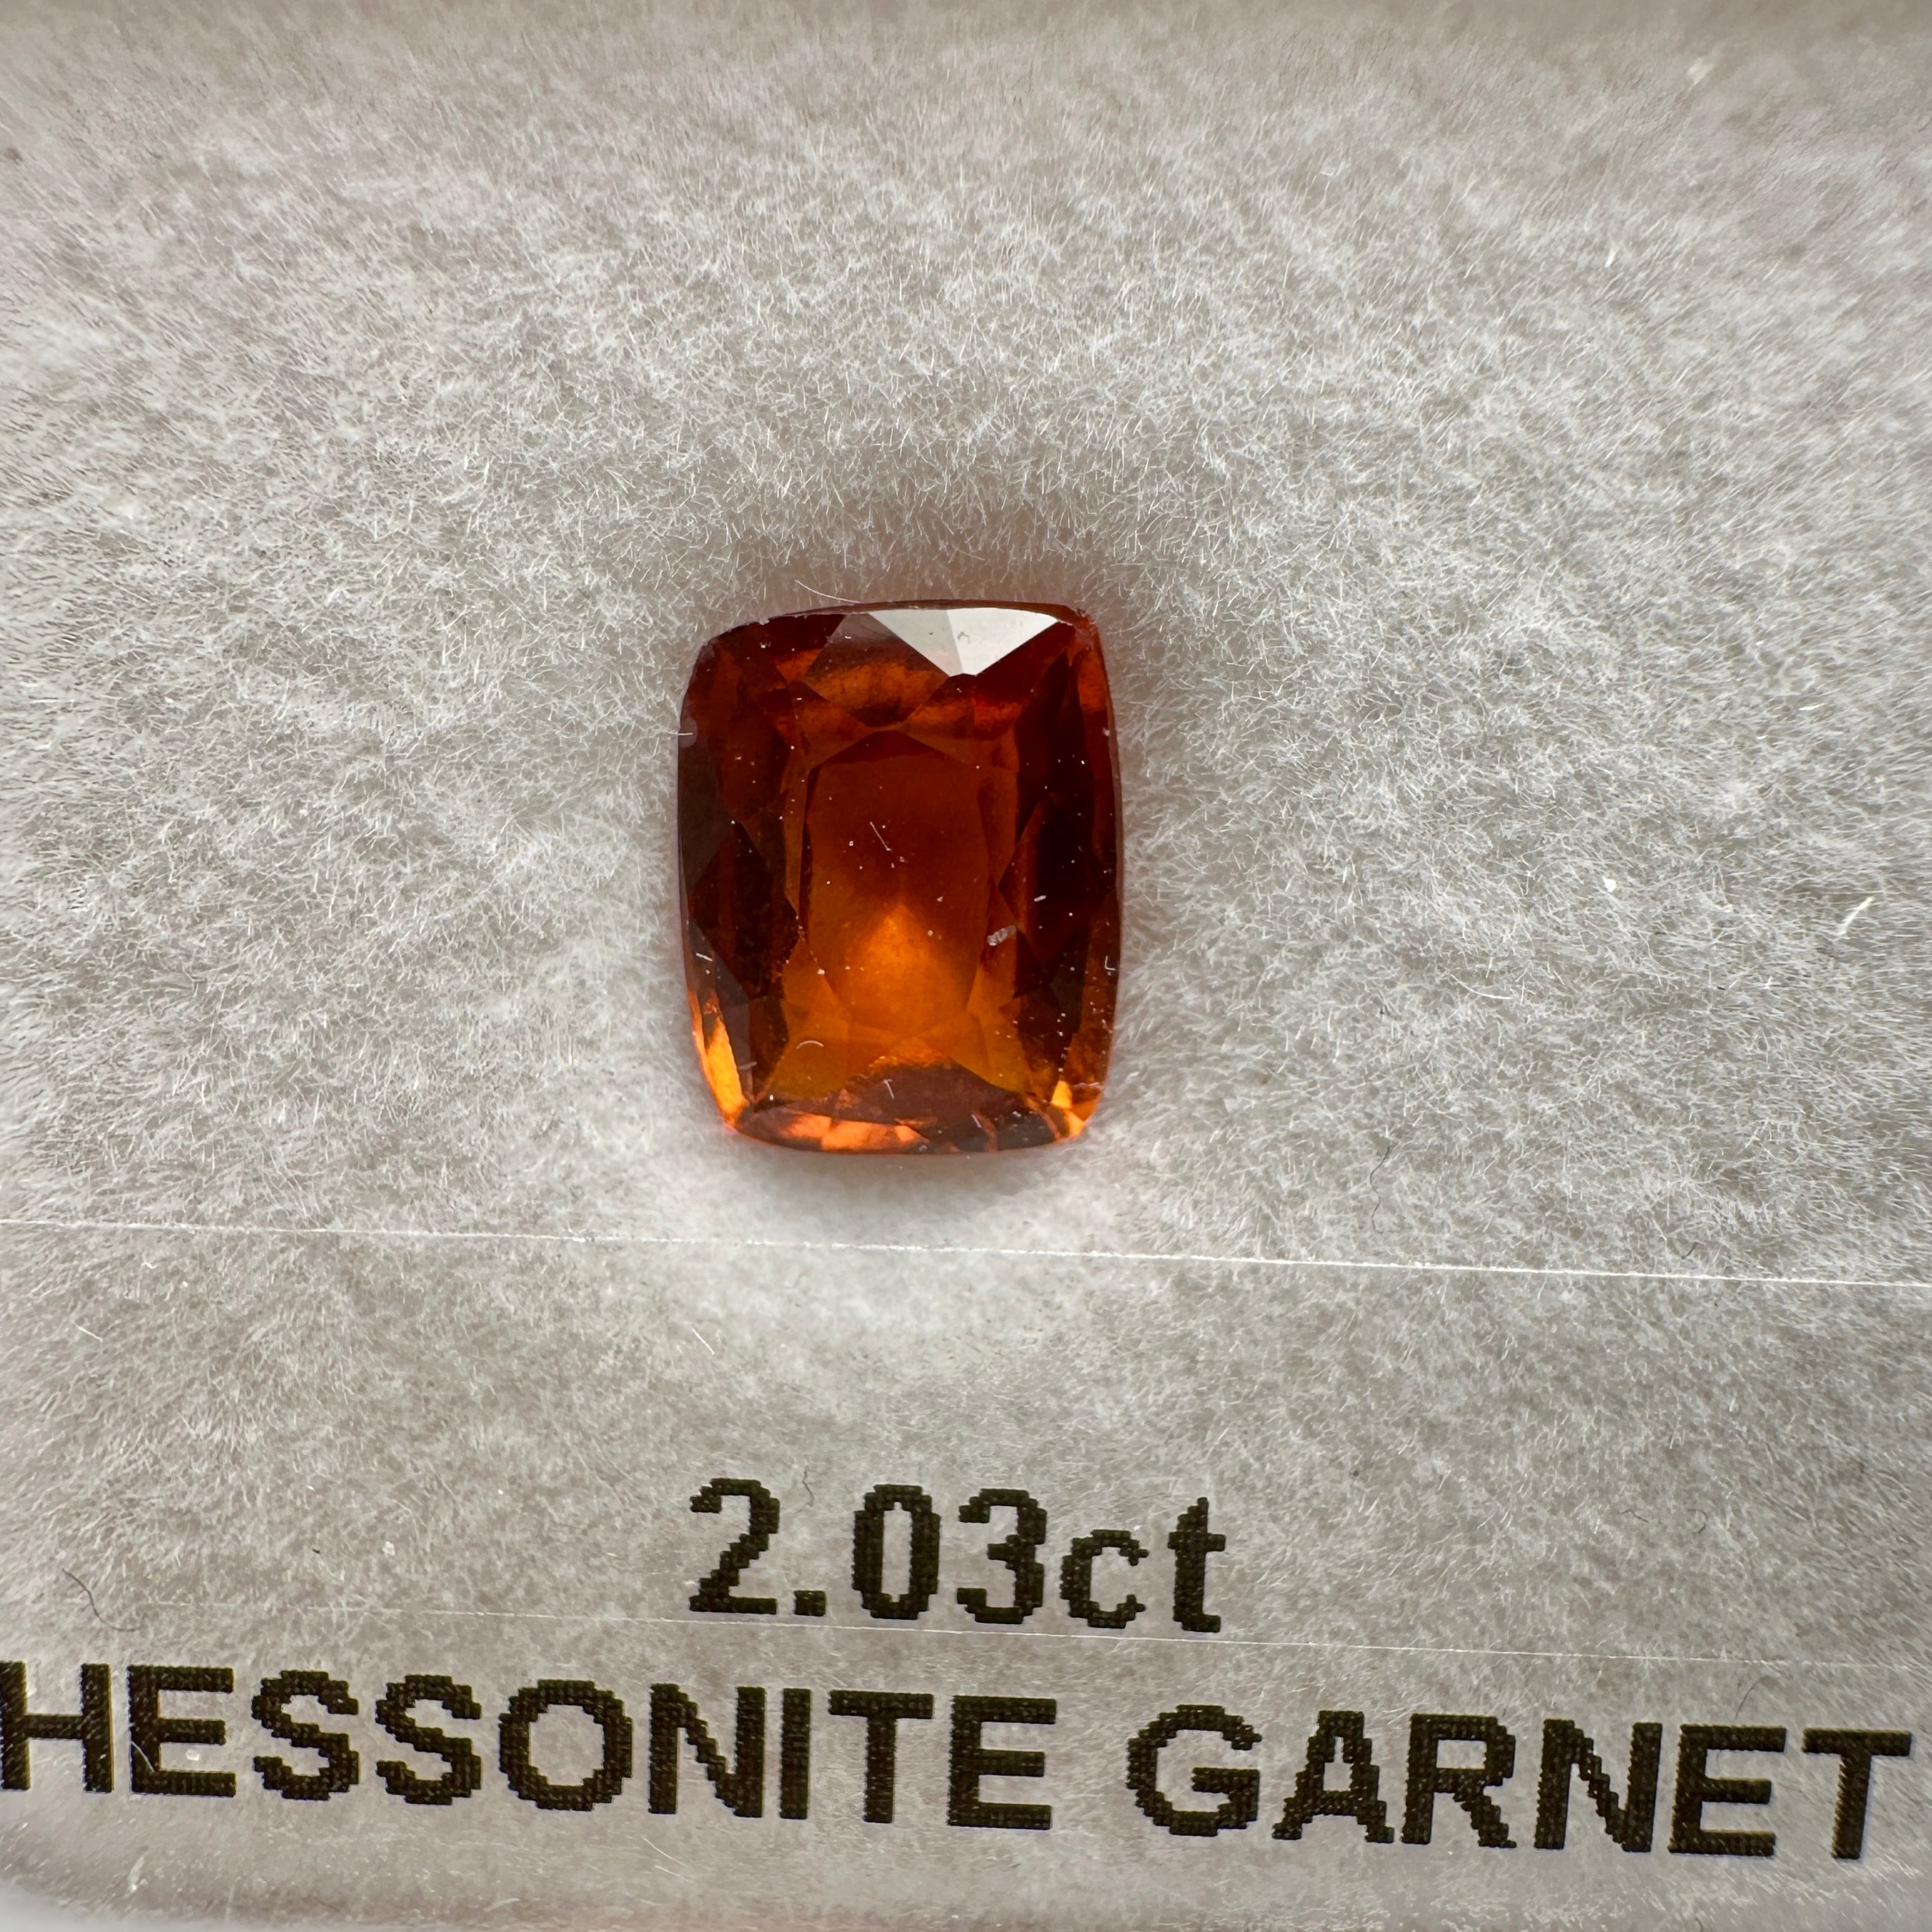 2.03ct Hessonite Garnet, Untreated Unheated, native cut